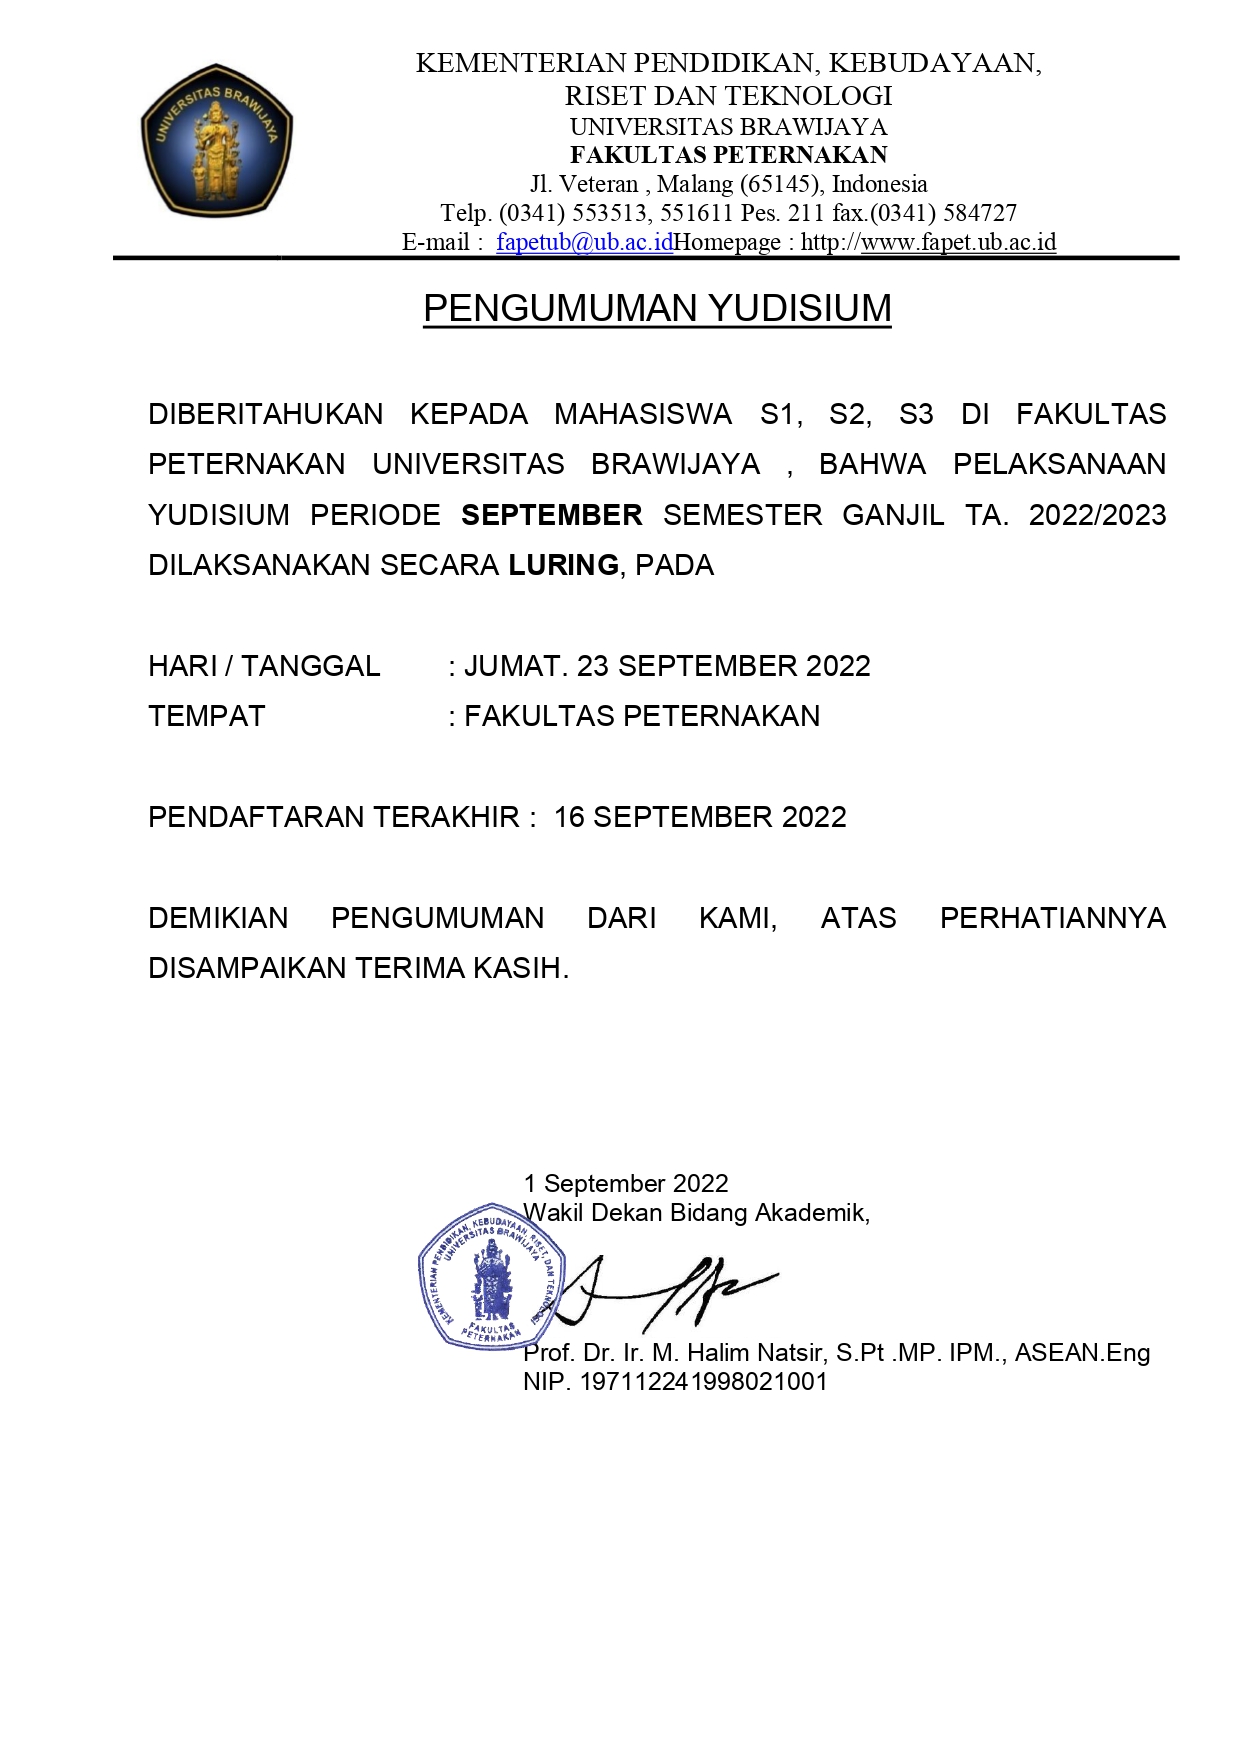 Pelaksanaan Yudisium Periode September 2022